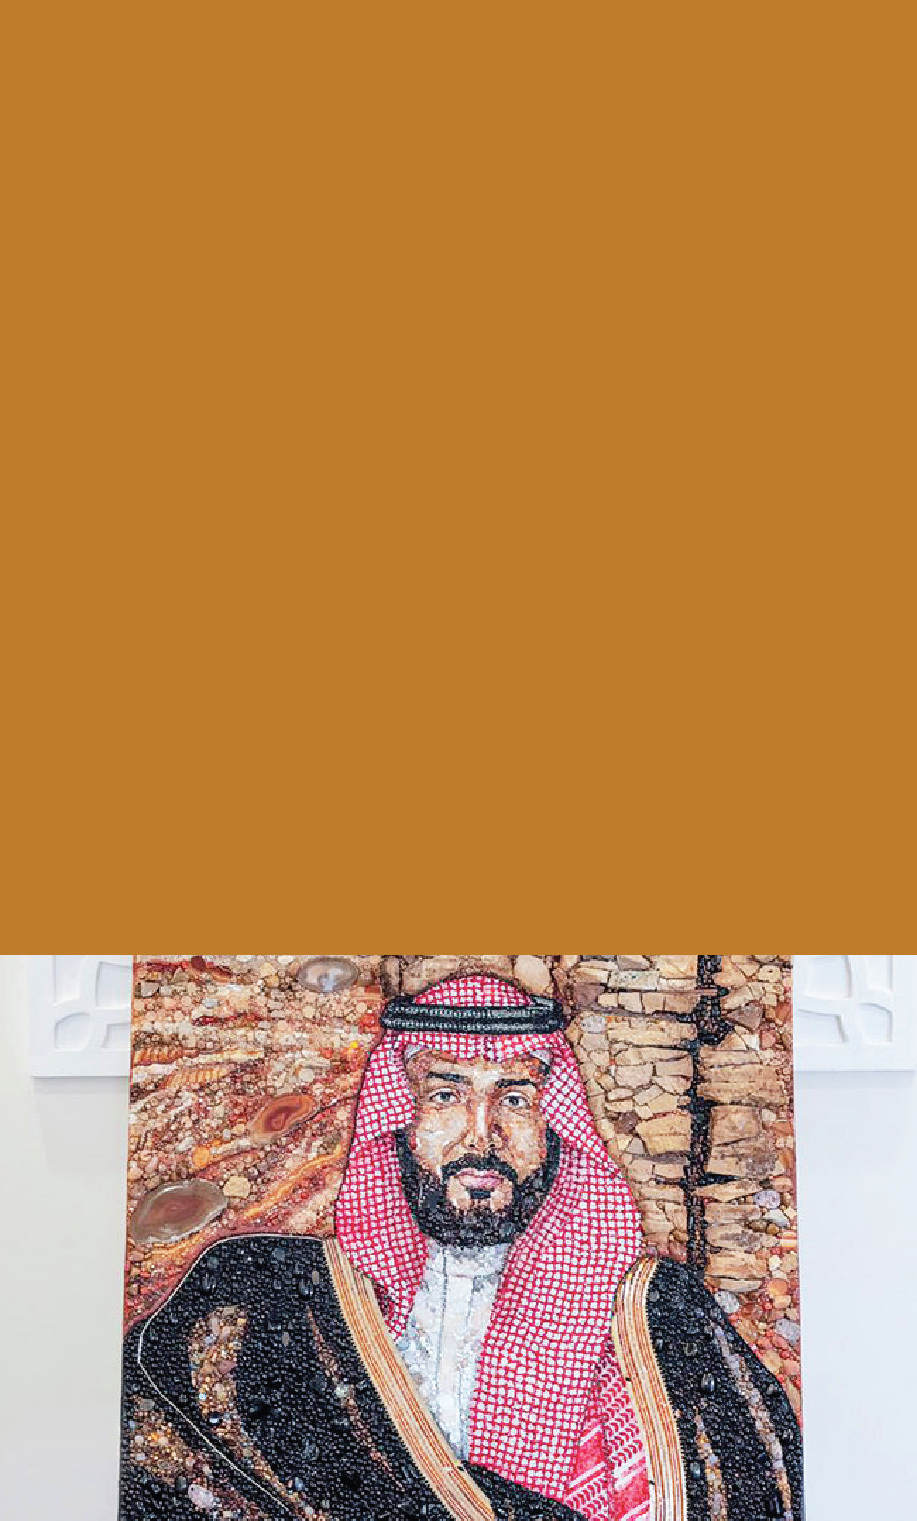 Saudi artist harnesses precious stones for portraits